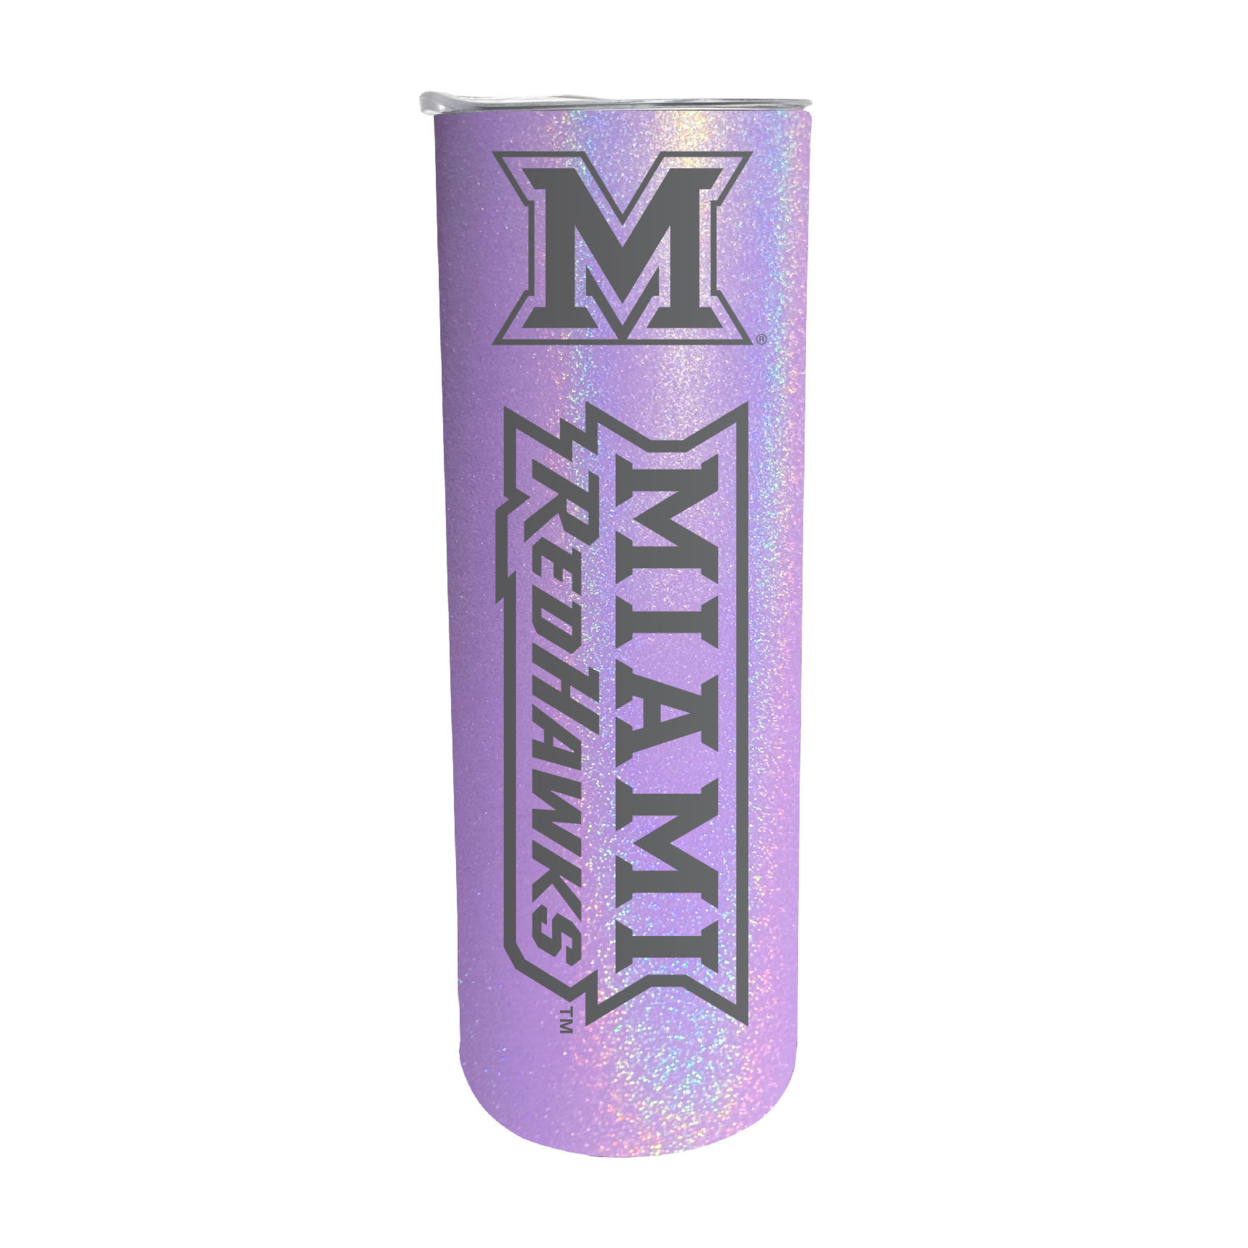 Miami University Of Ohio 20oz Insulated Stainless Steel Skinny Tumbler - Rainbow Glitter Purple